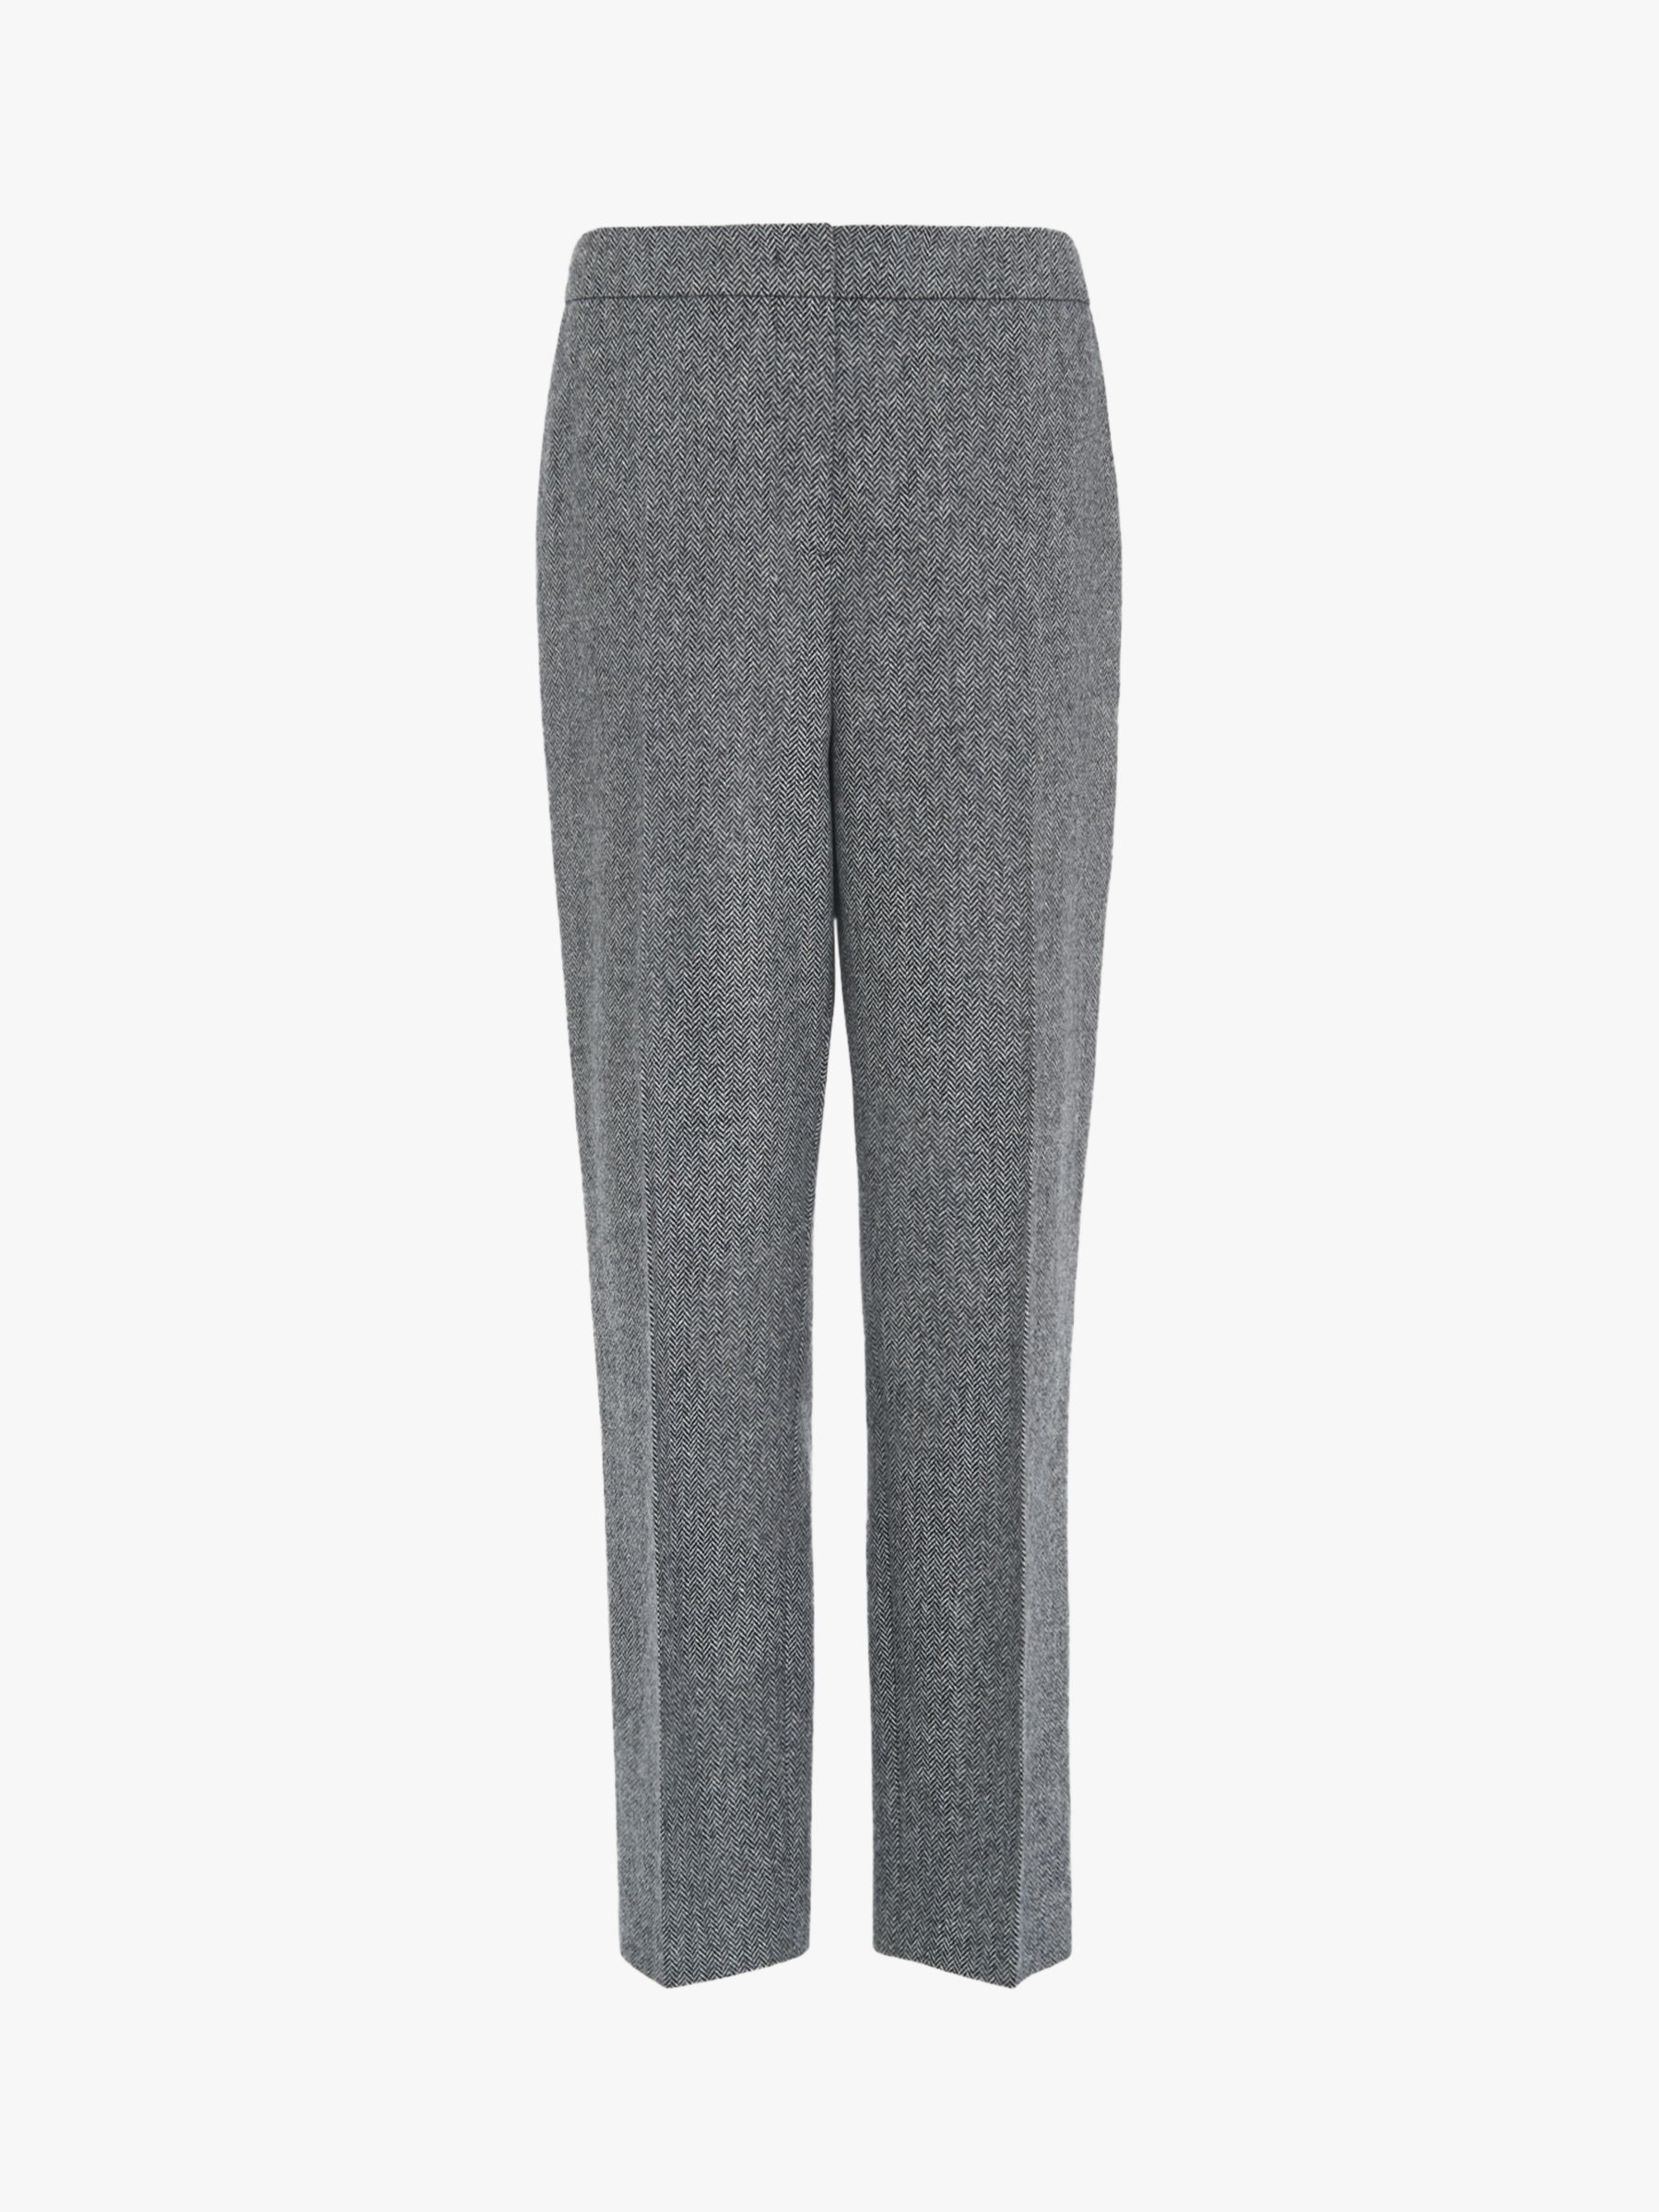 L.K.Bennett Frances Slim Wool Trousers, Grey at John Lewis & Partners